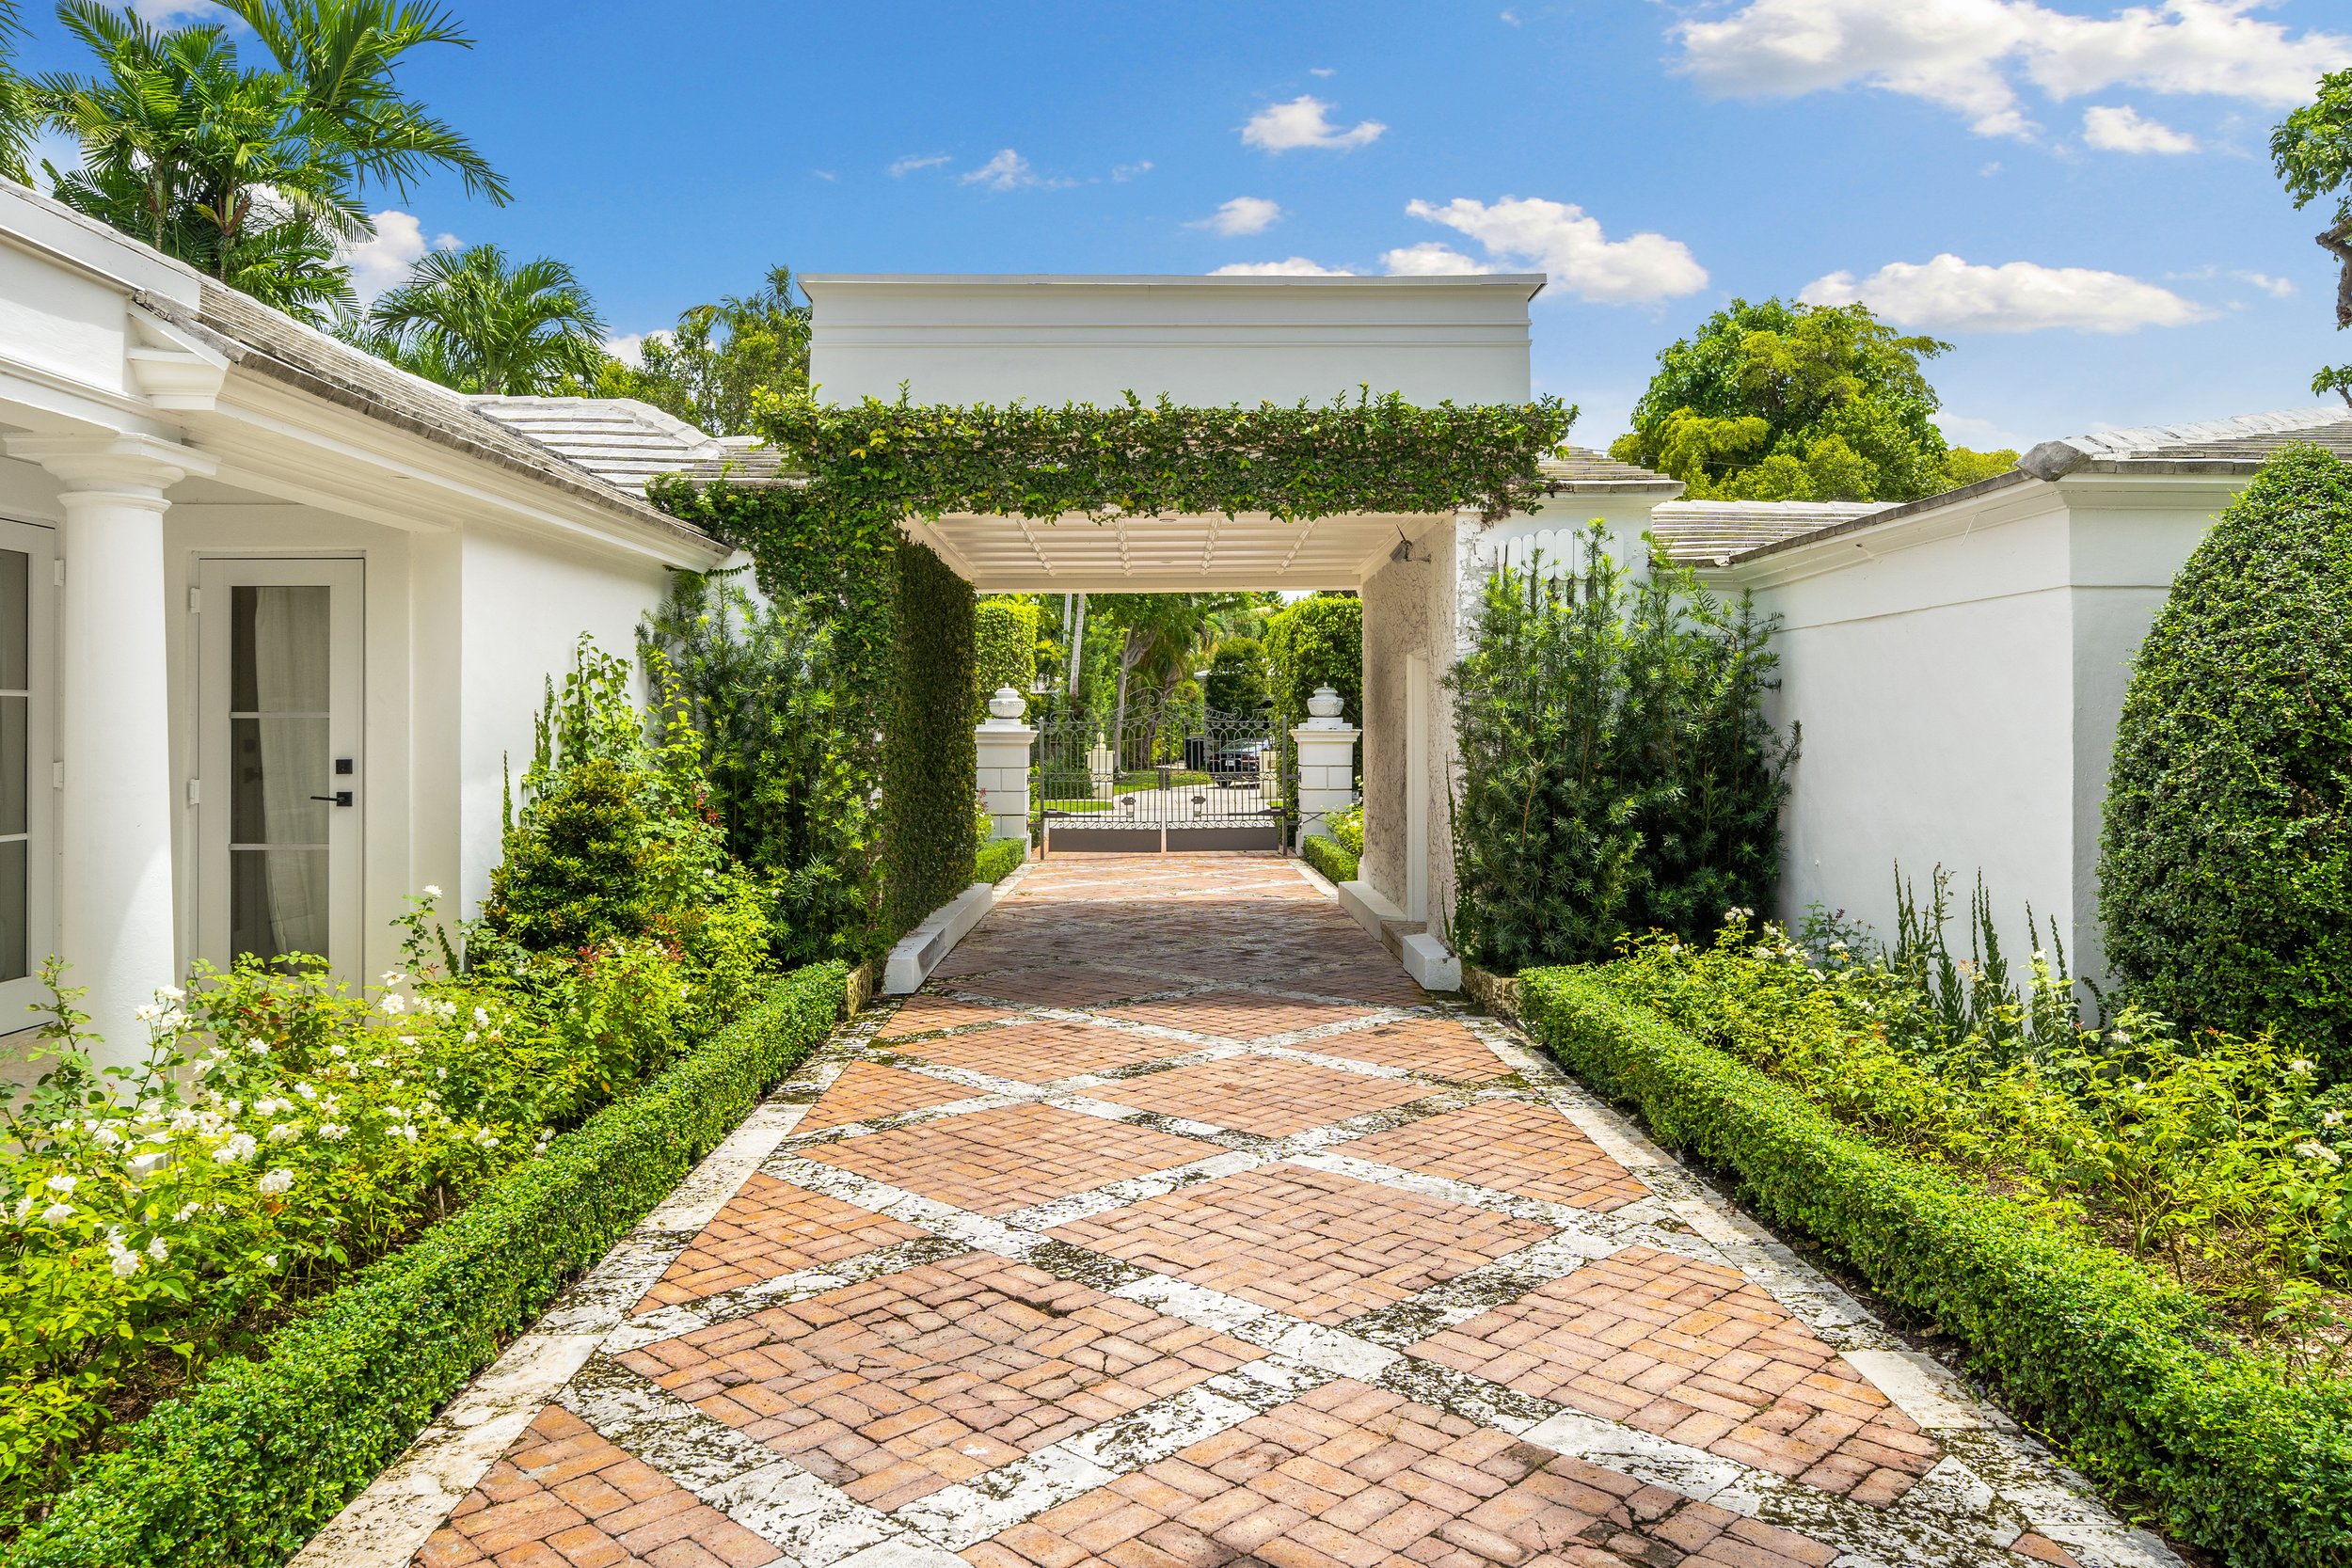 Tory Burch Co-Founder Lists Lavish Miami Beach Estate For $49 Million 12.jpg